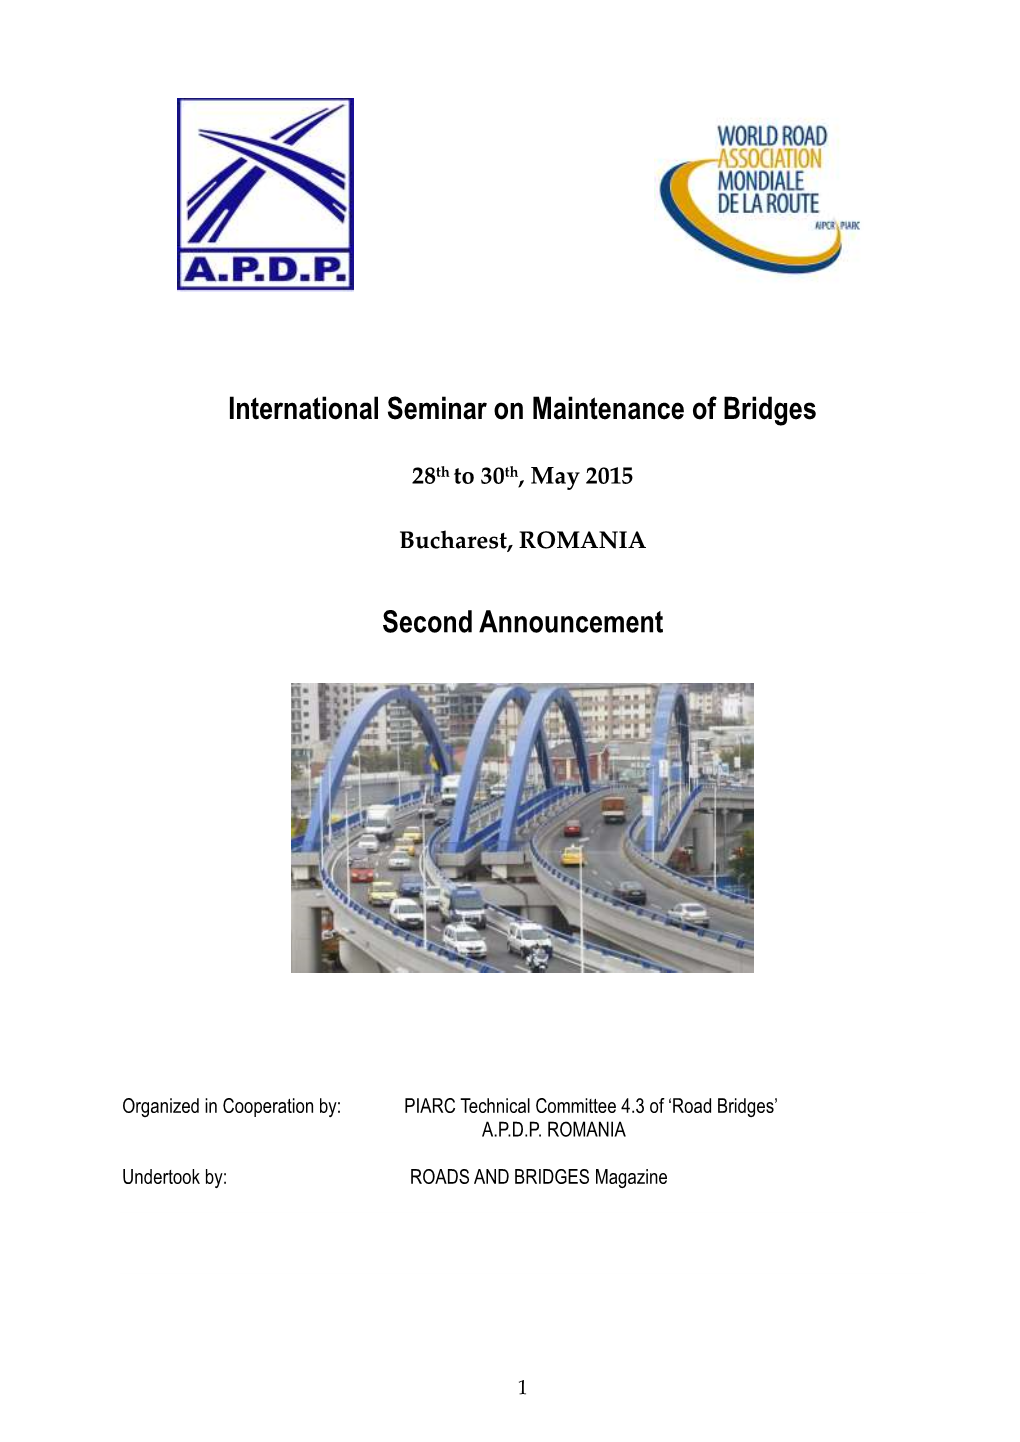 International Seminar on Maintenance of Bridges Second Announcement